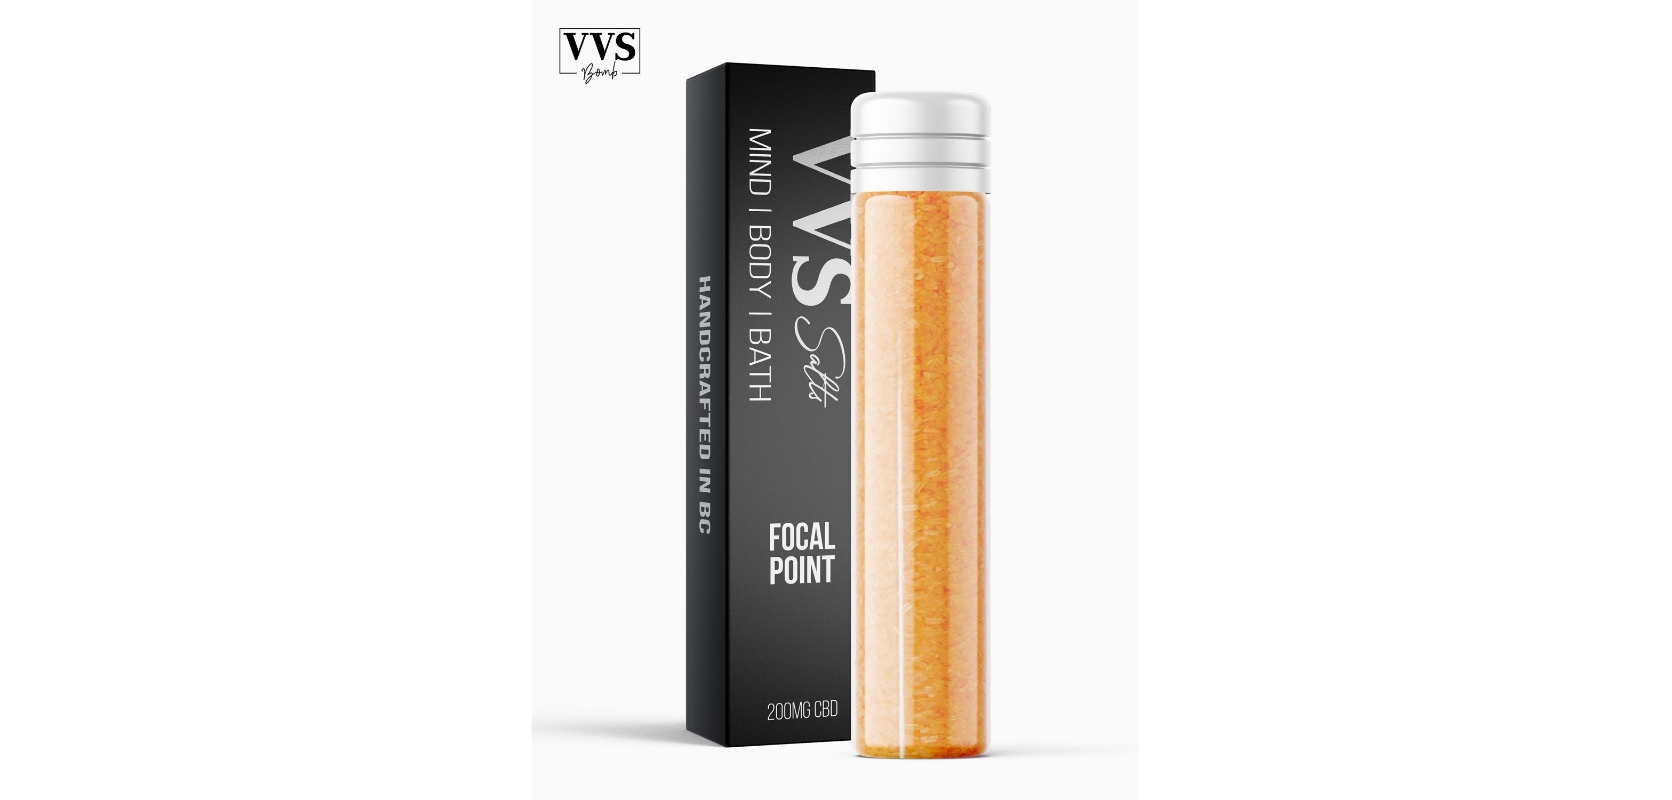 If you want to get a hefty dose of cannabidiol, consider the VVS Bath Salts – Focal Point 200mg CBD. 